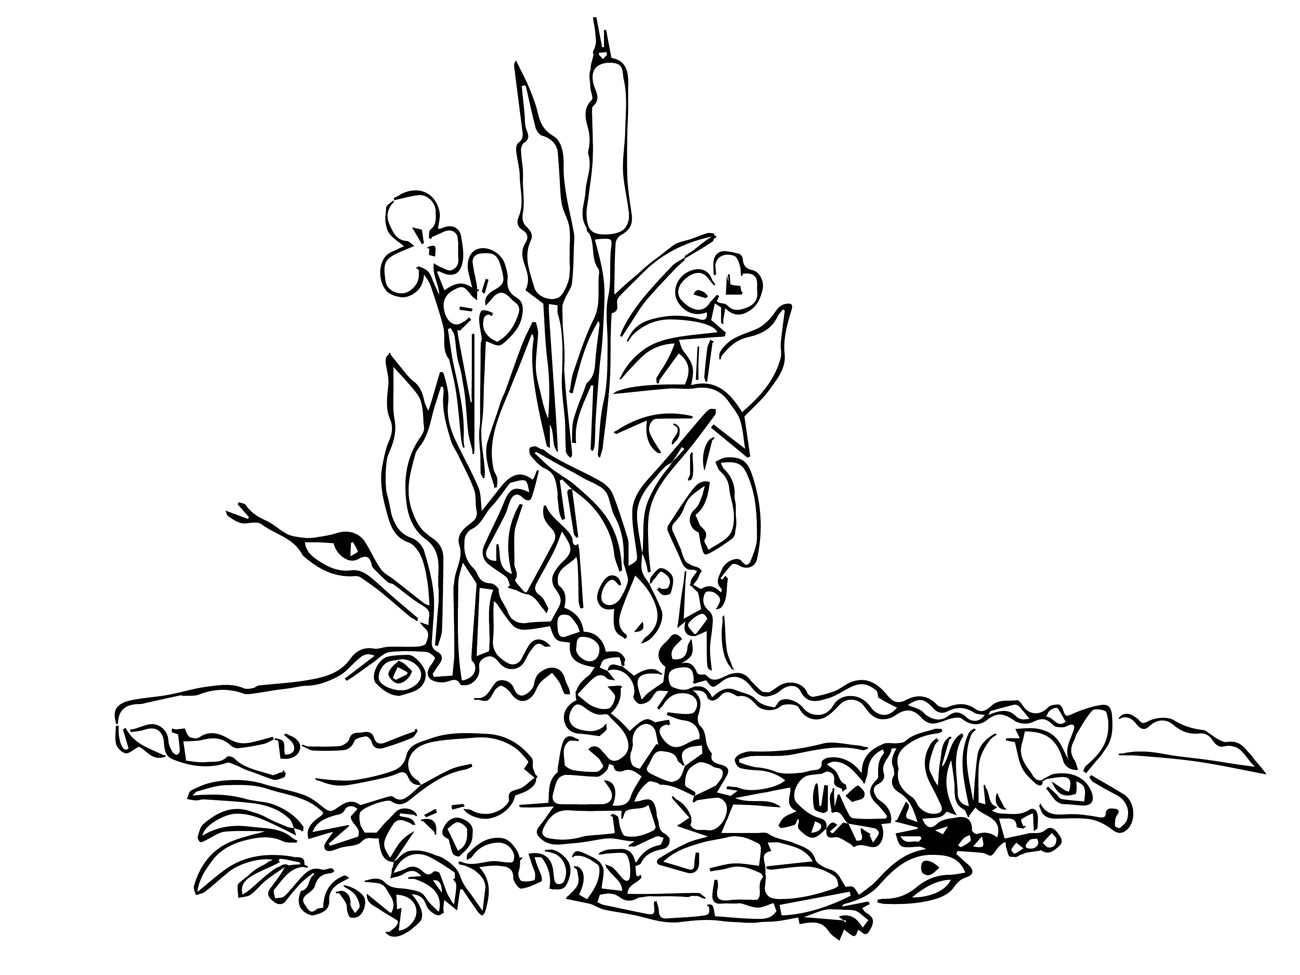 Illustration of wetland plants and animals